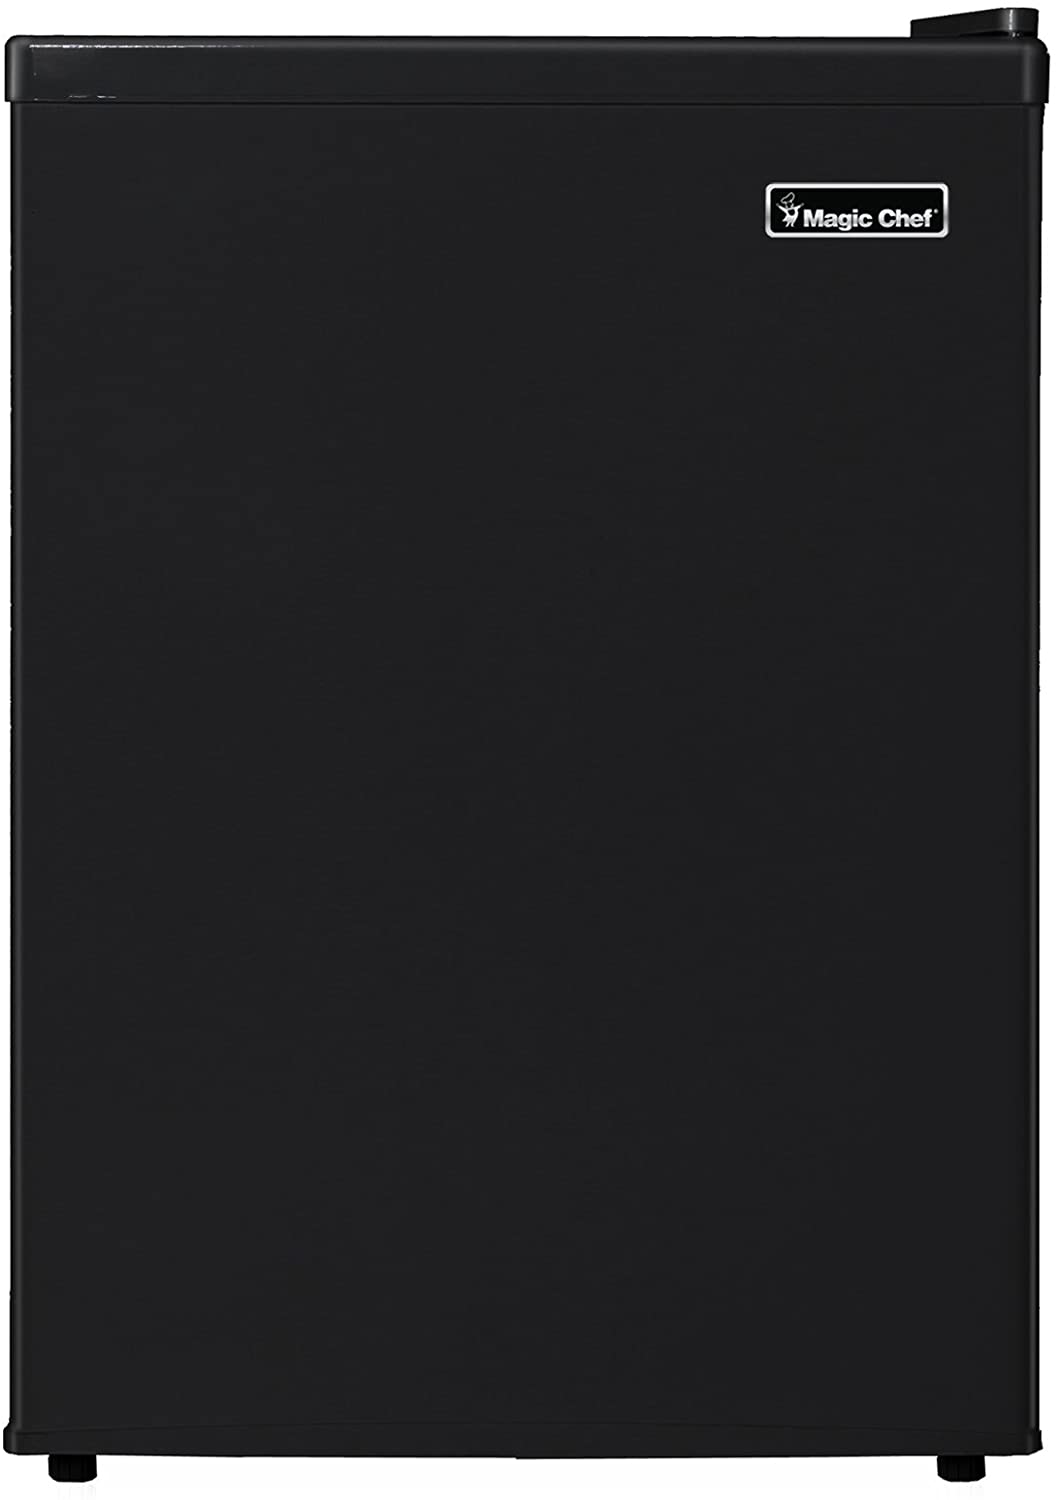 Magic Chef Compact Magic Chef - 2.4 Cu Ft Refrigerator Manual Defrost